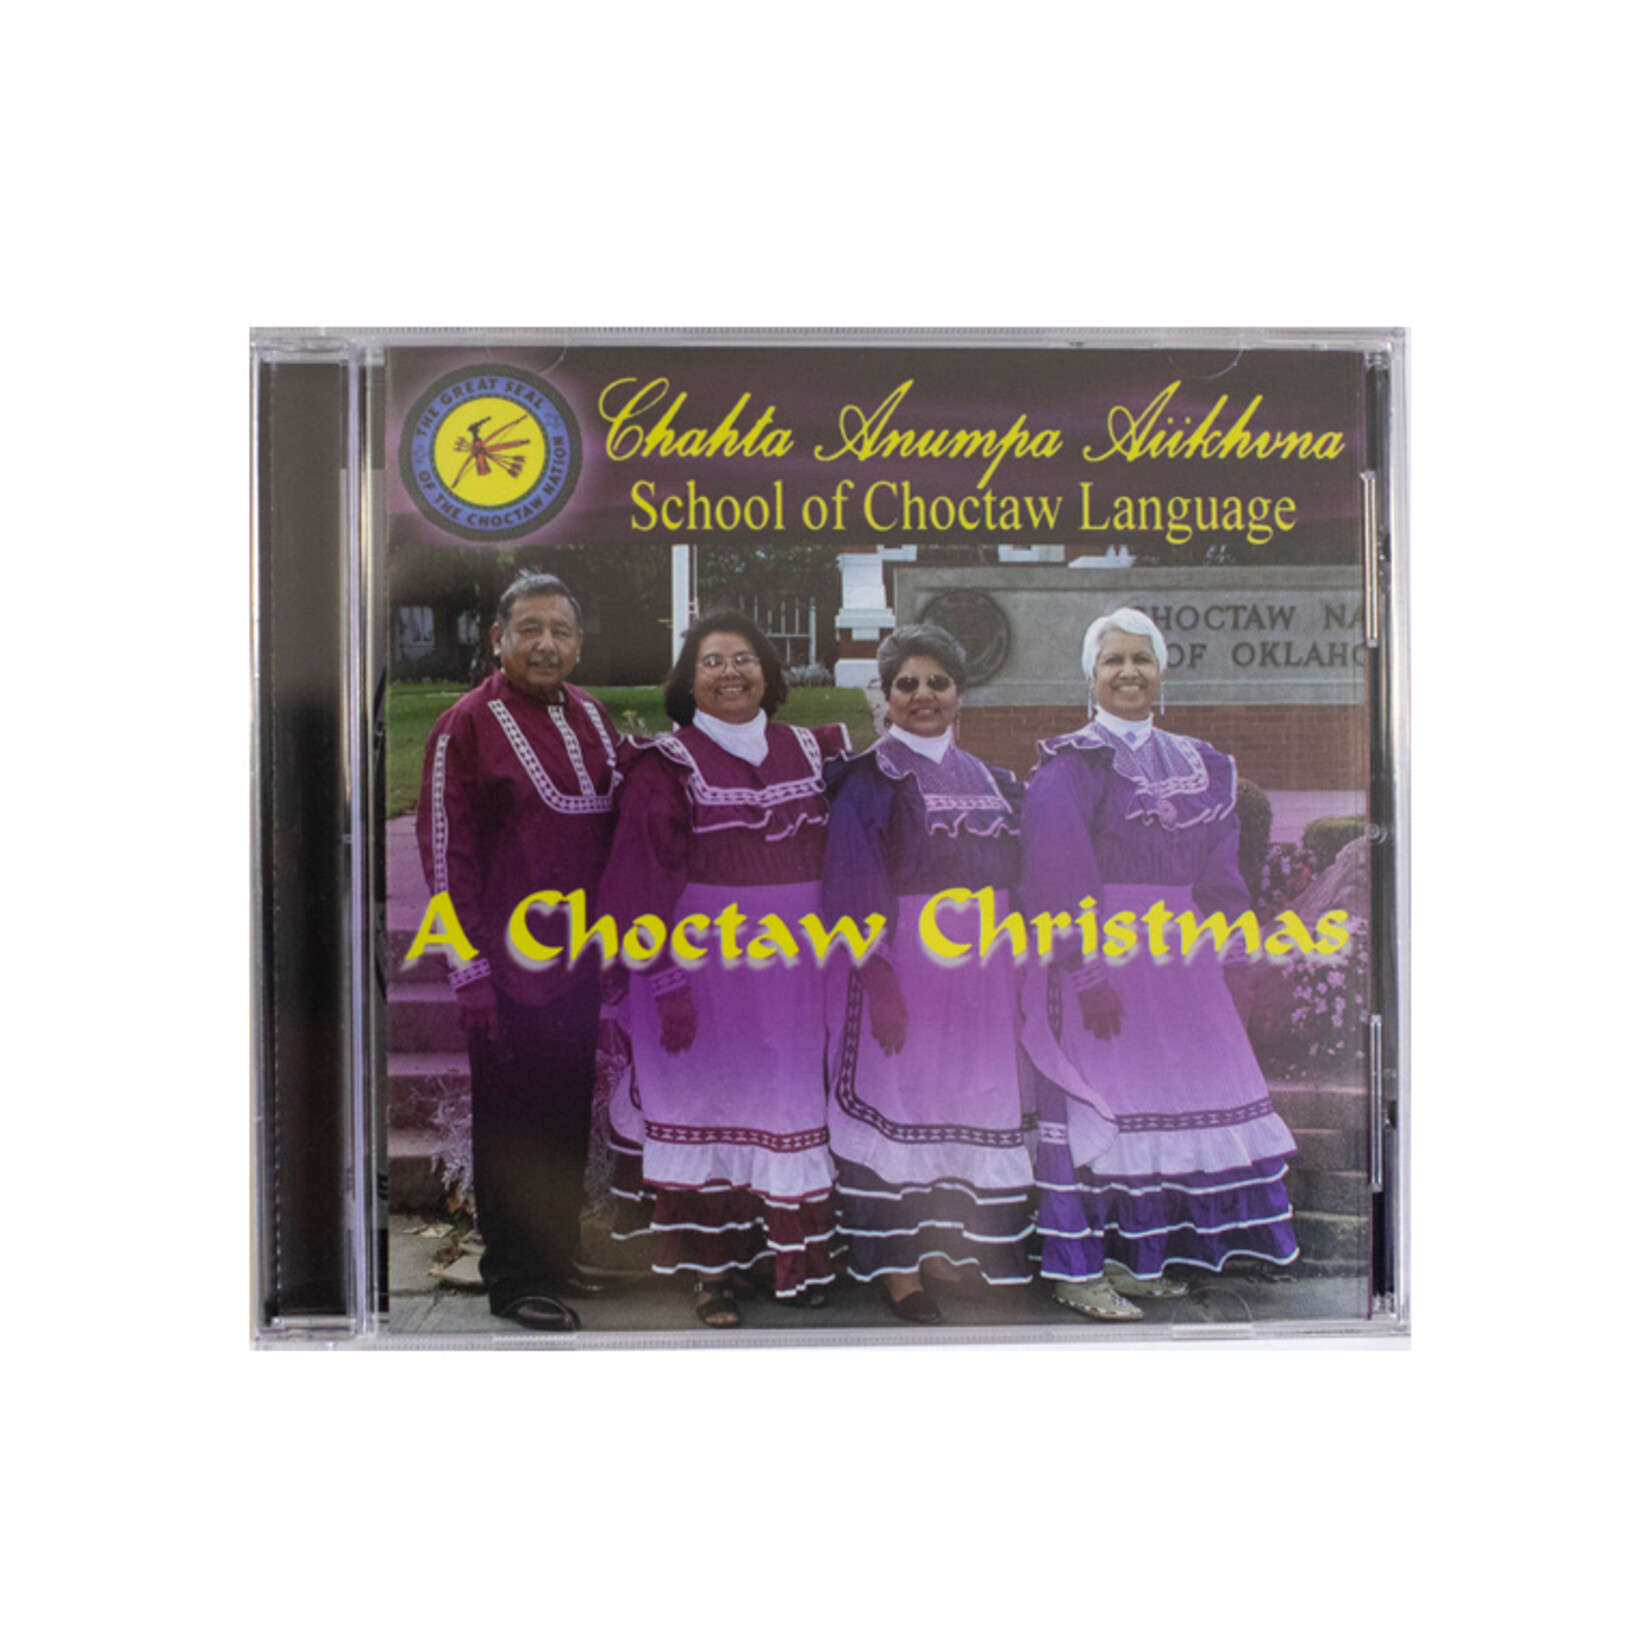 A Choctaw Christmas"  CD